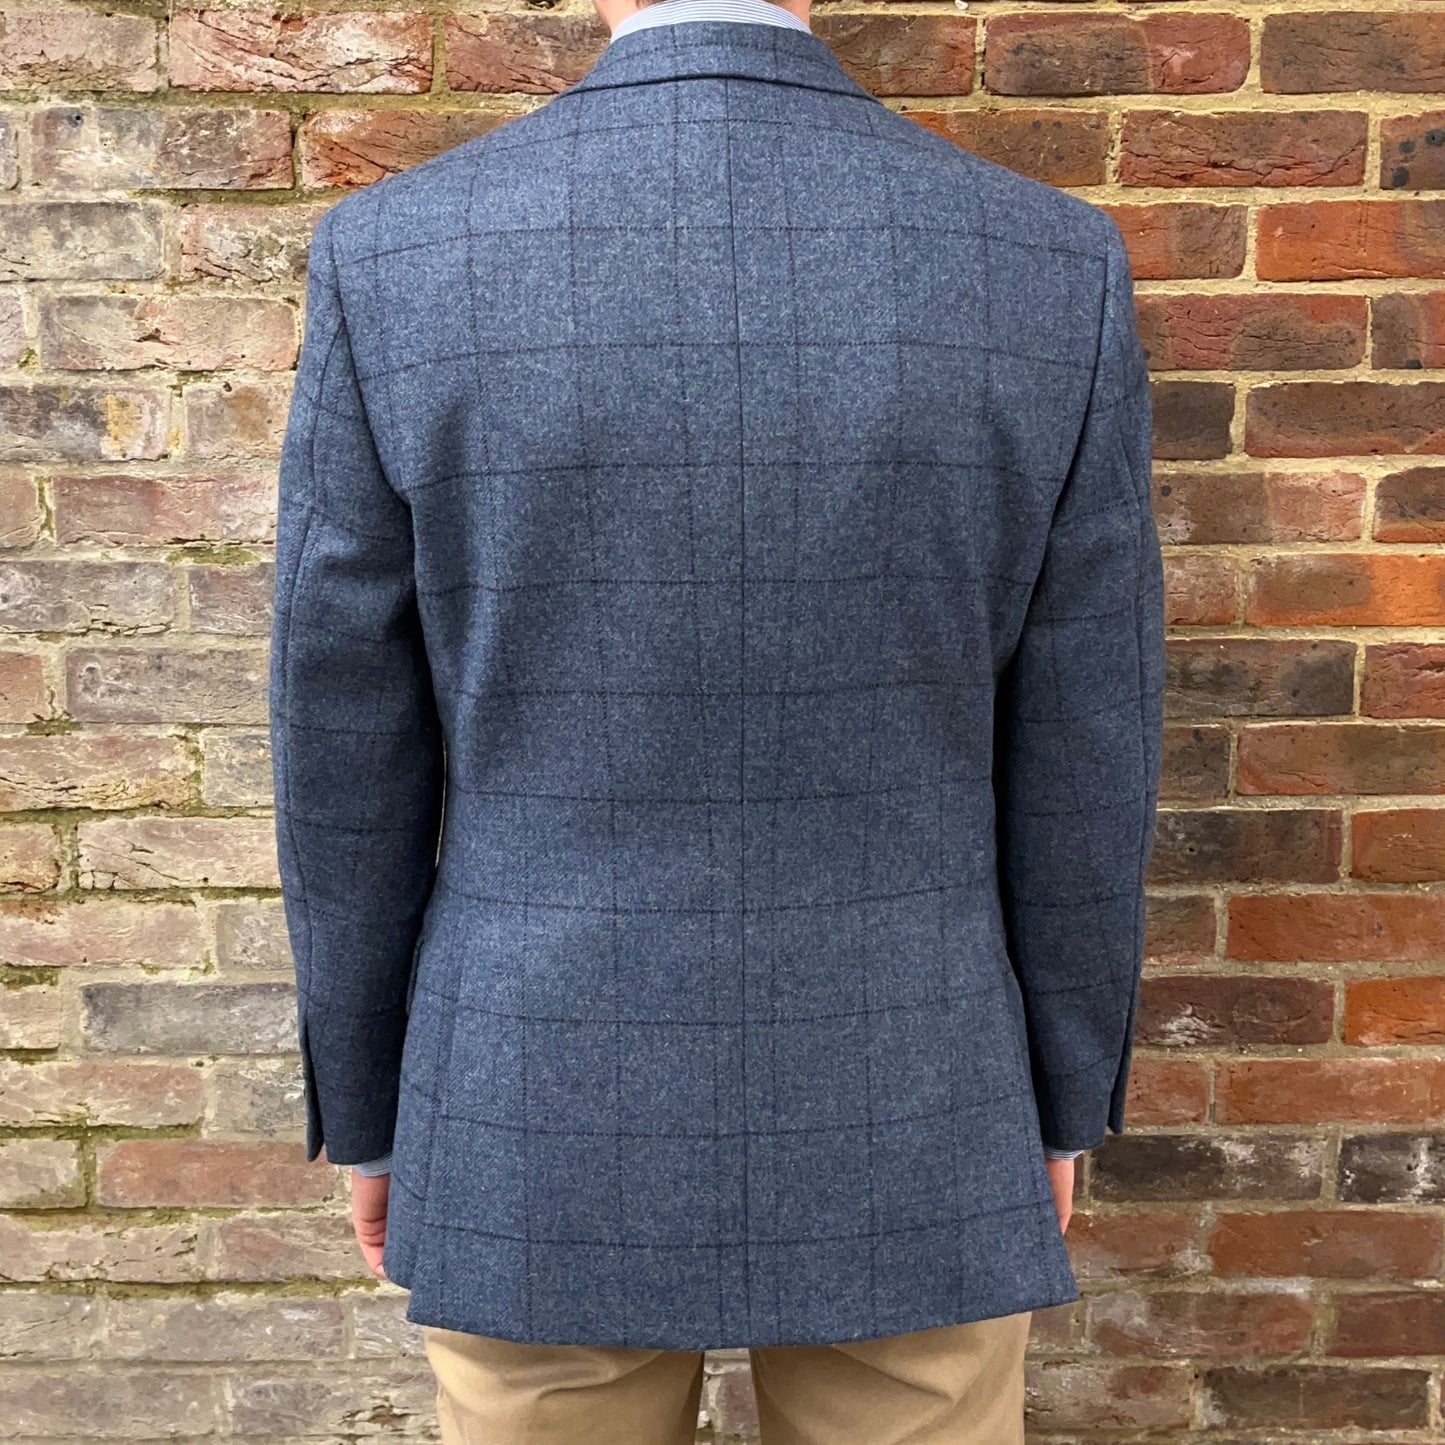 Regent blue tweed jacket with overcheck - rear